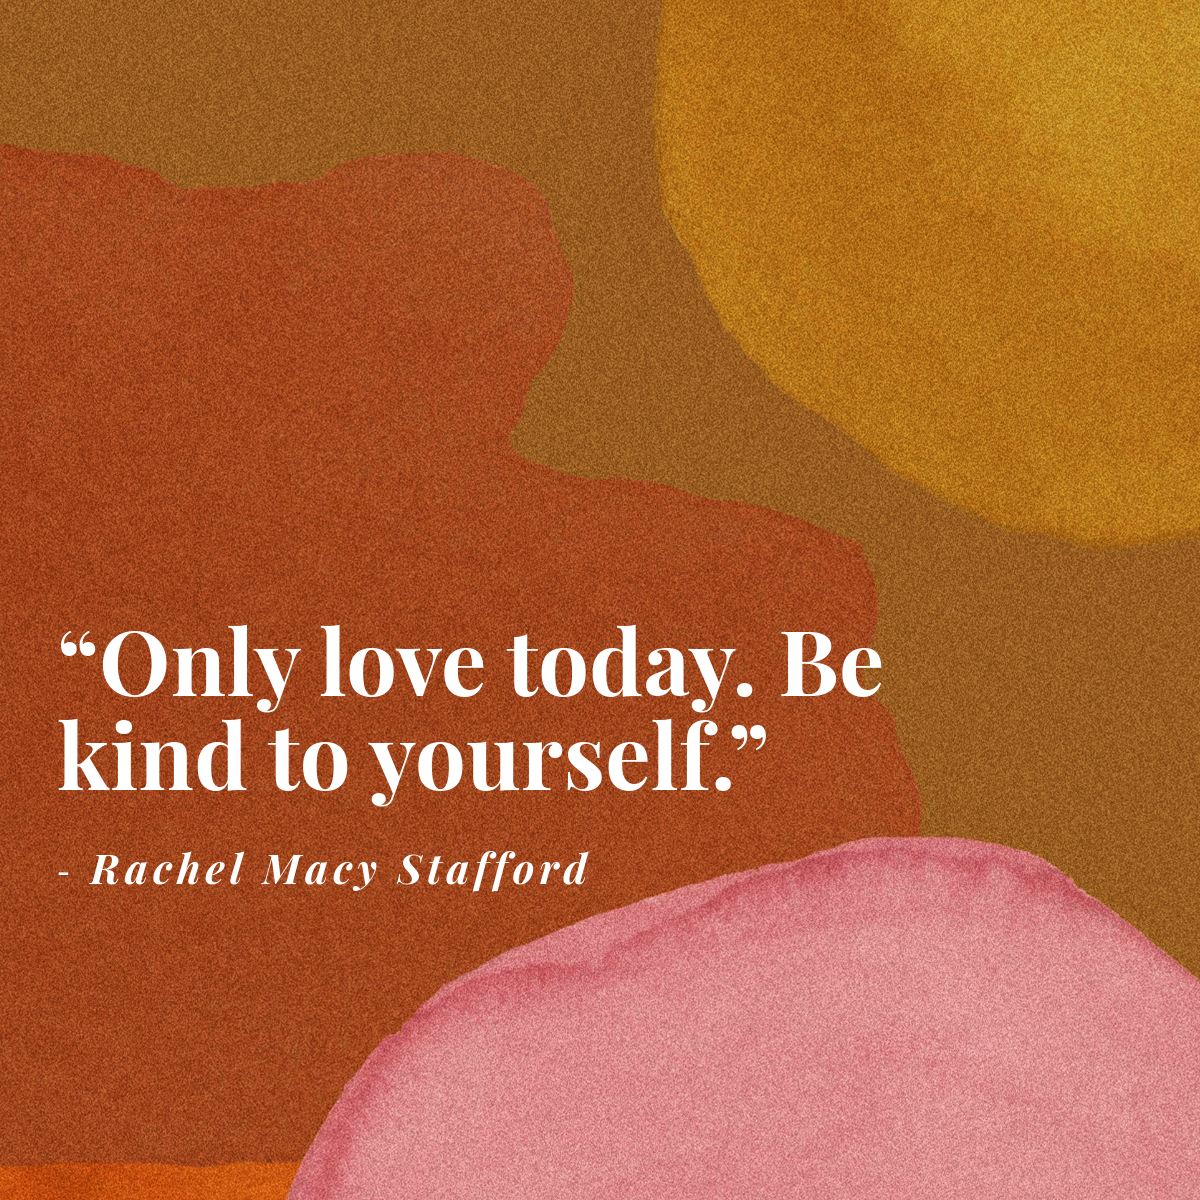 Self-Love Quotes